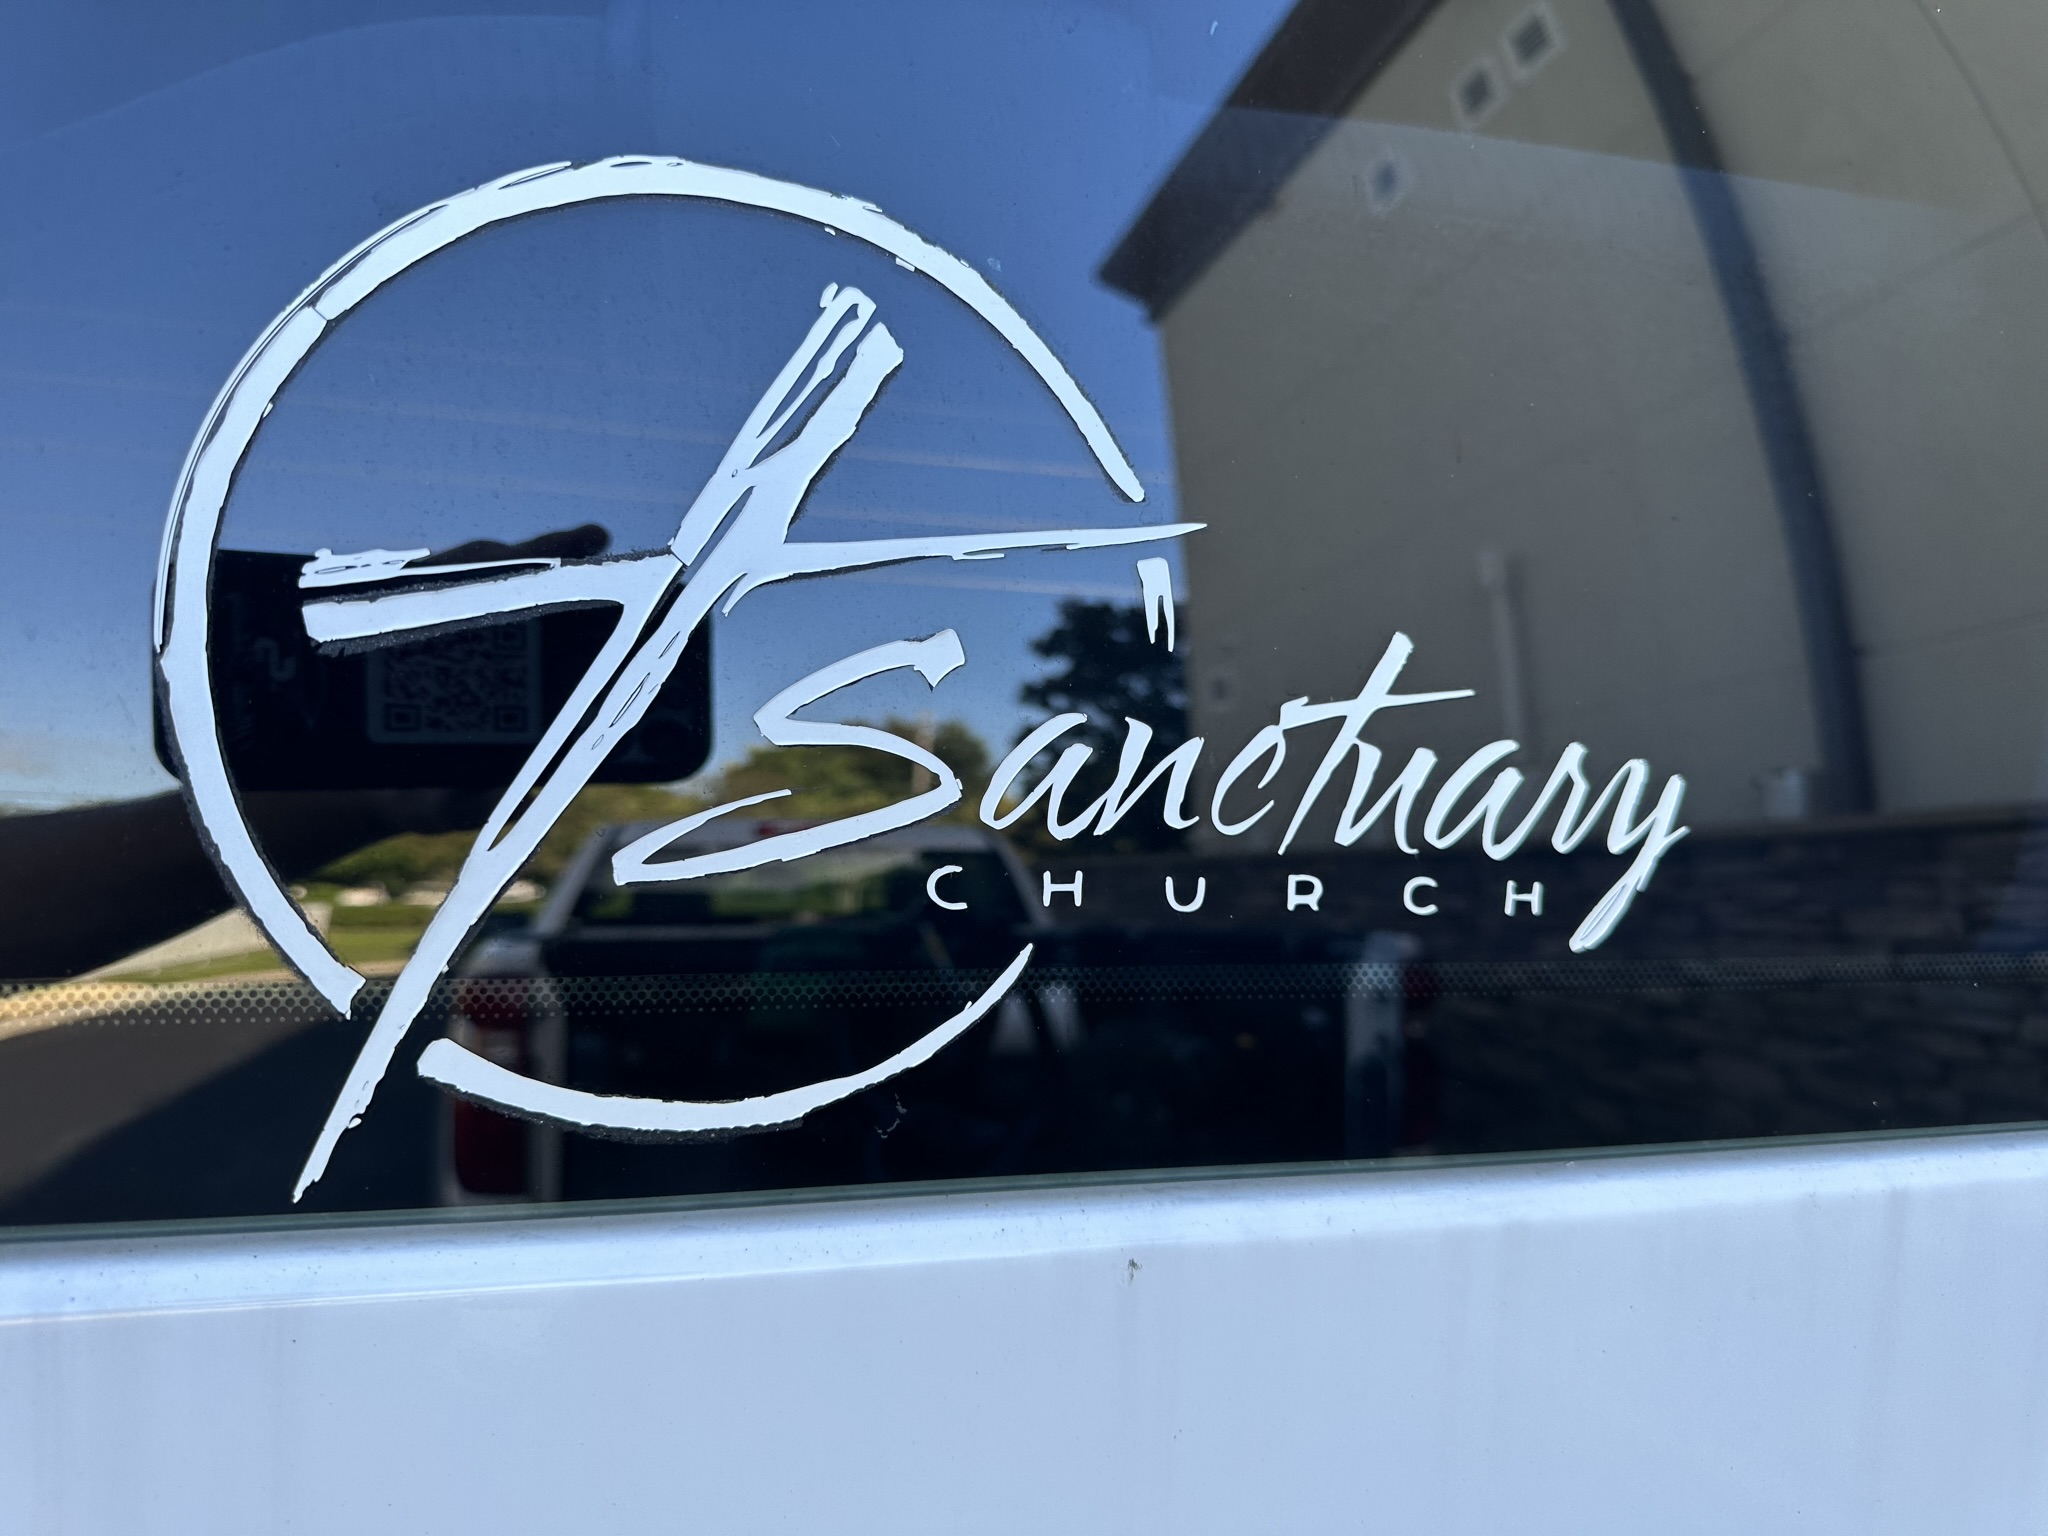 Flawless Interior for Sanctuary Church in Orlando, Florida